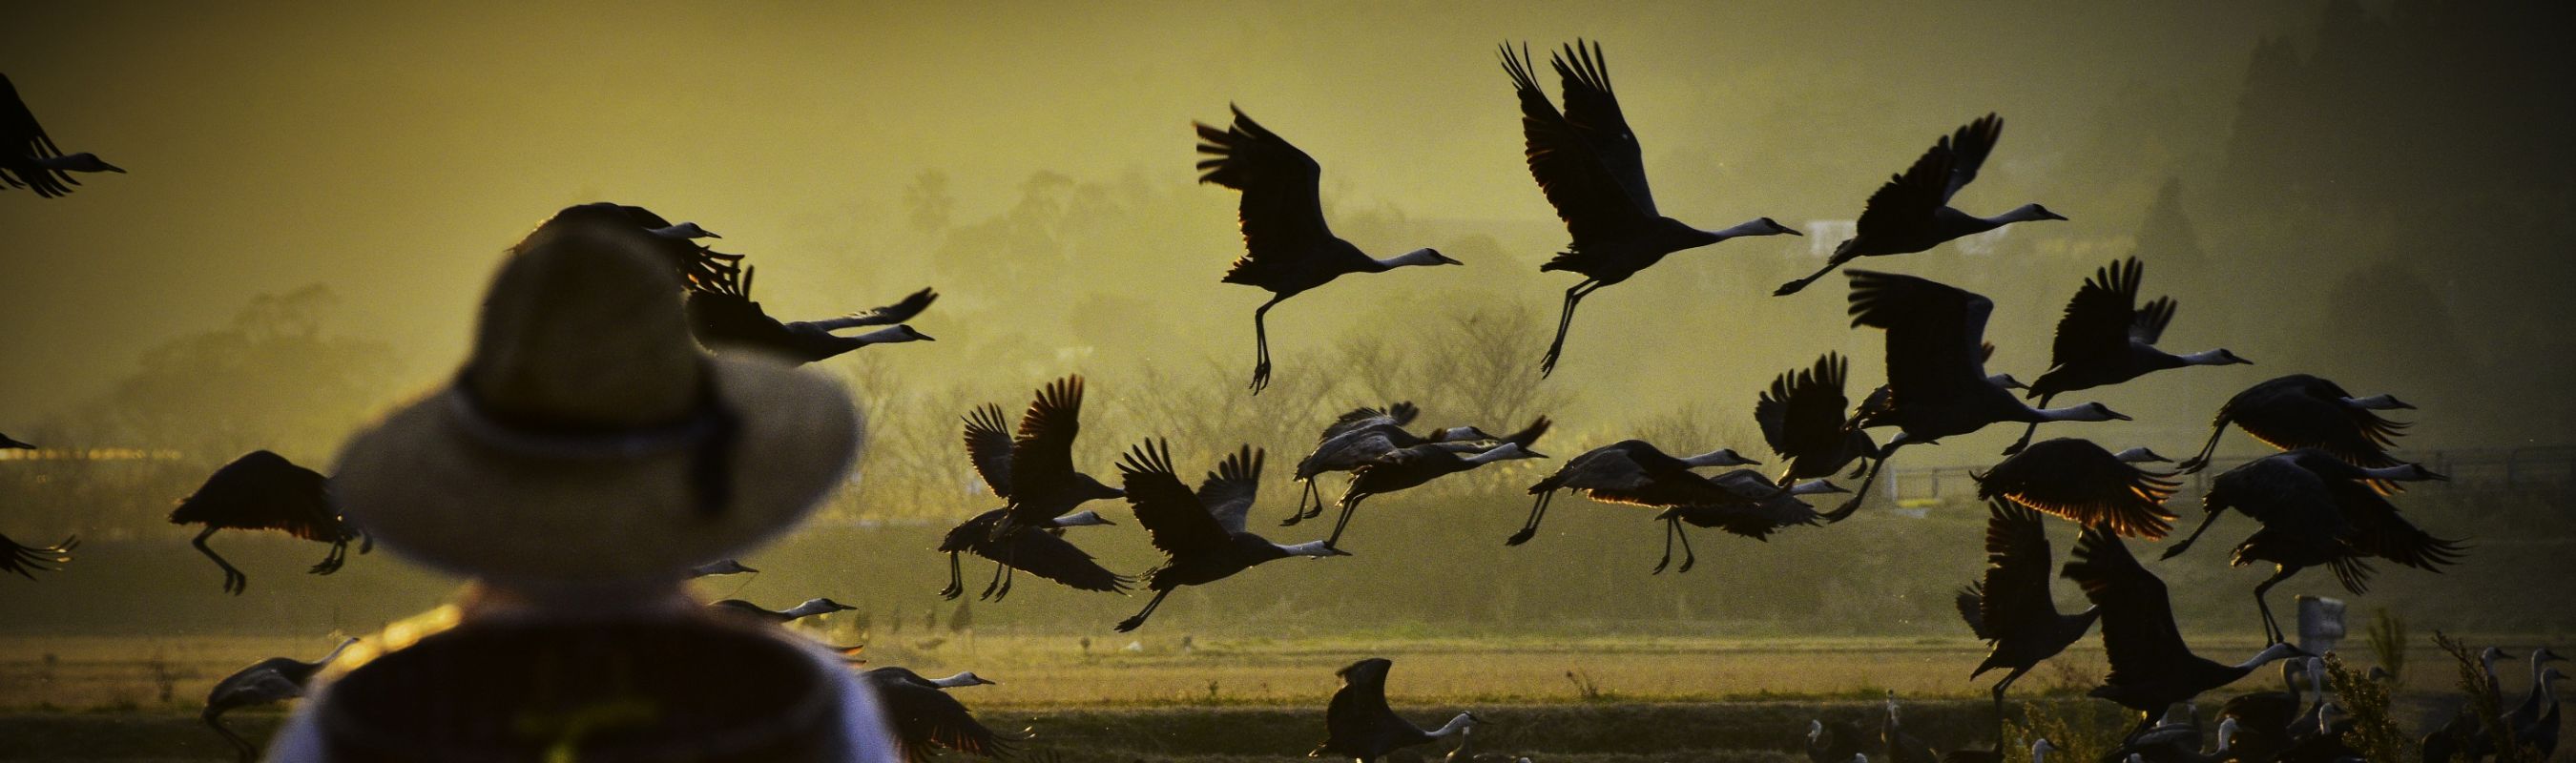 Image:Cranes